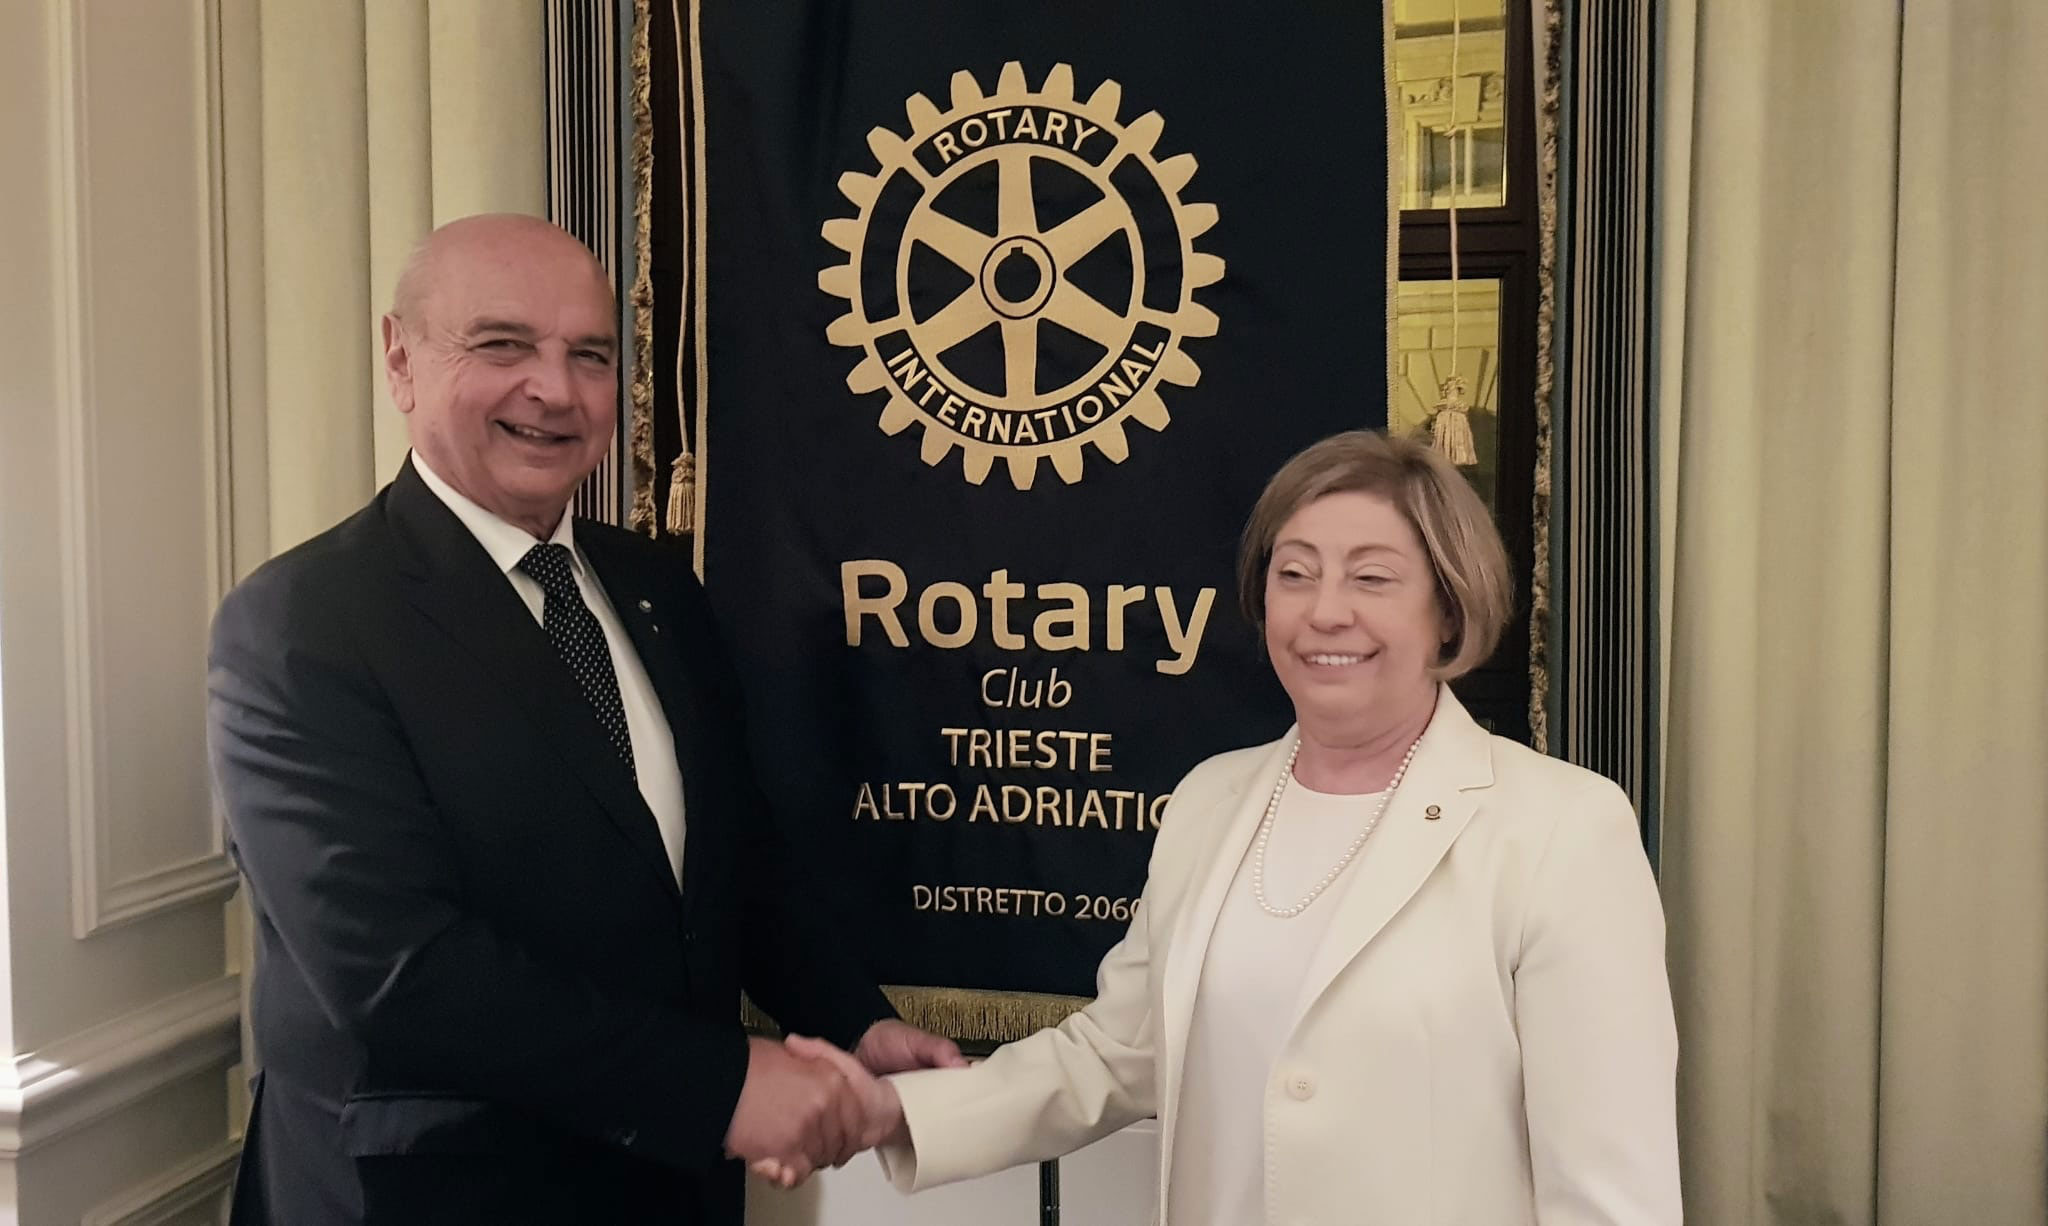 Roberto Dipiazza Maura Busico Rotary